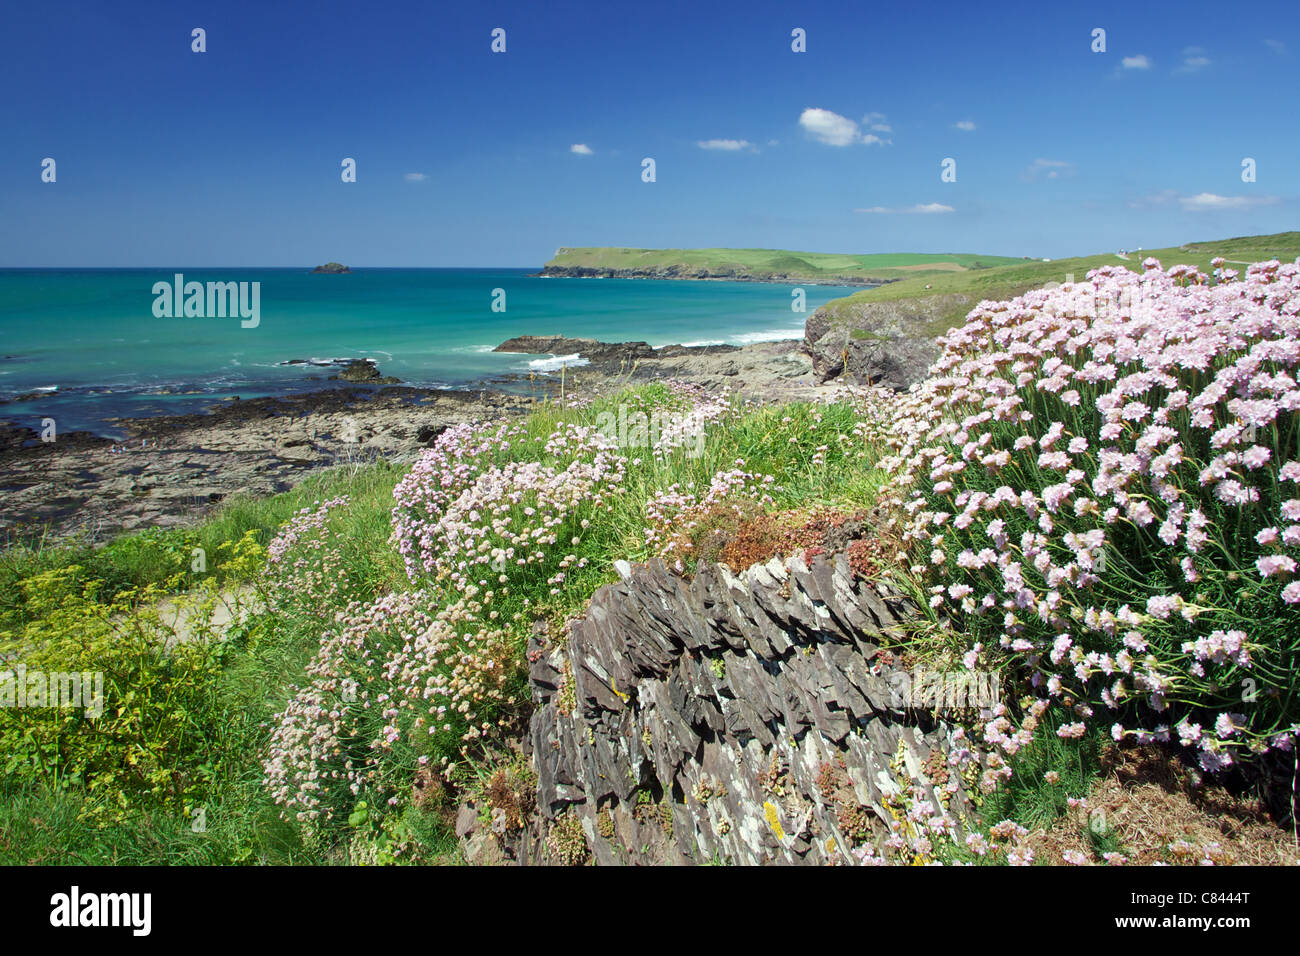 Flowers growing on rocky beach Stock Photo - Alamy